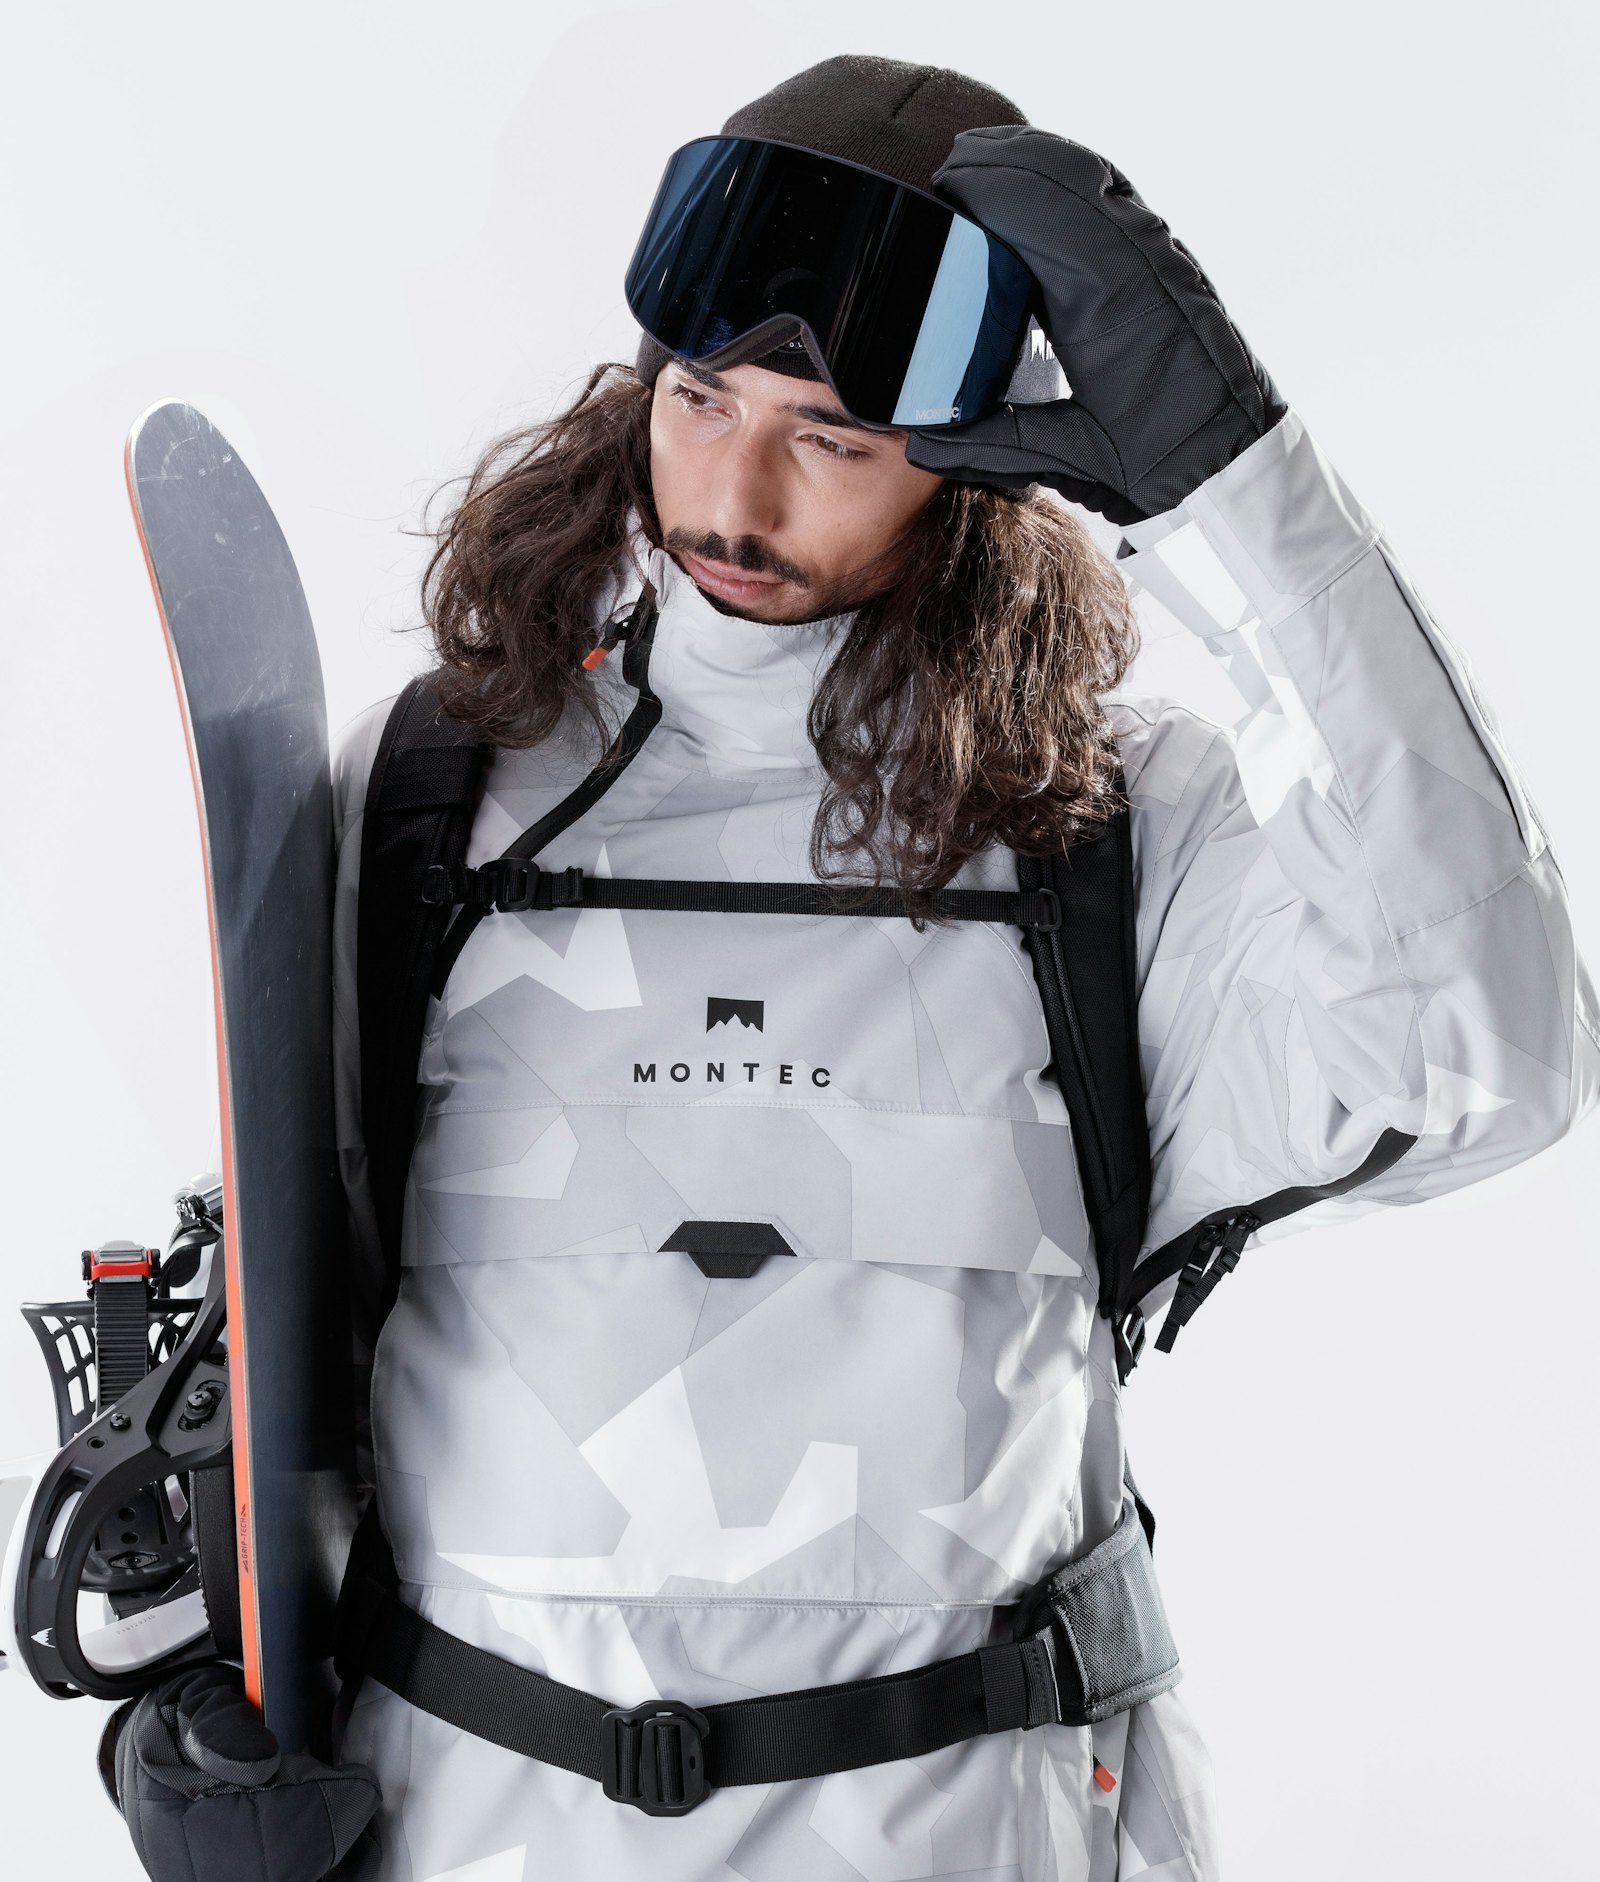 Dune 2020 Veste Snowboard Homme Snow Camo